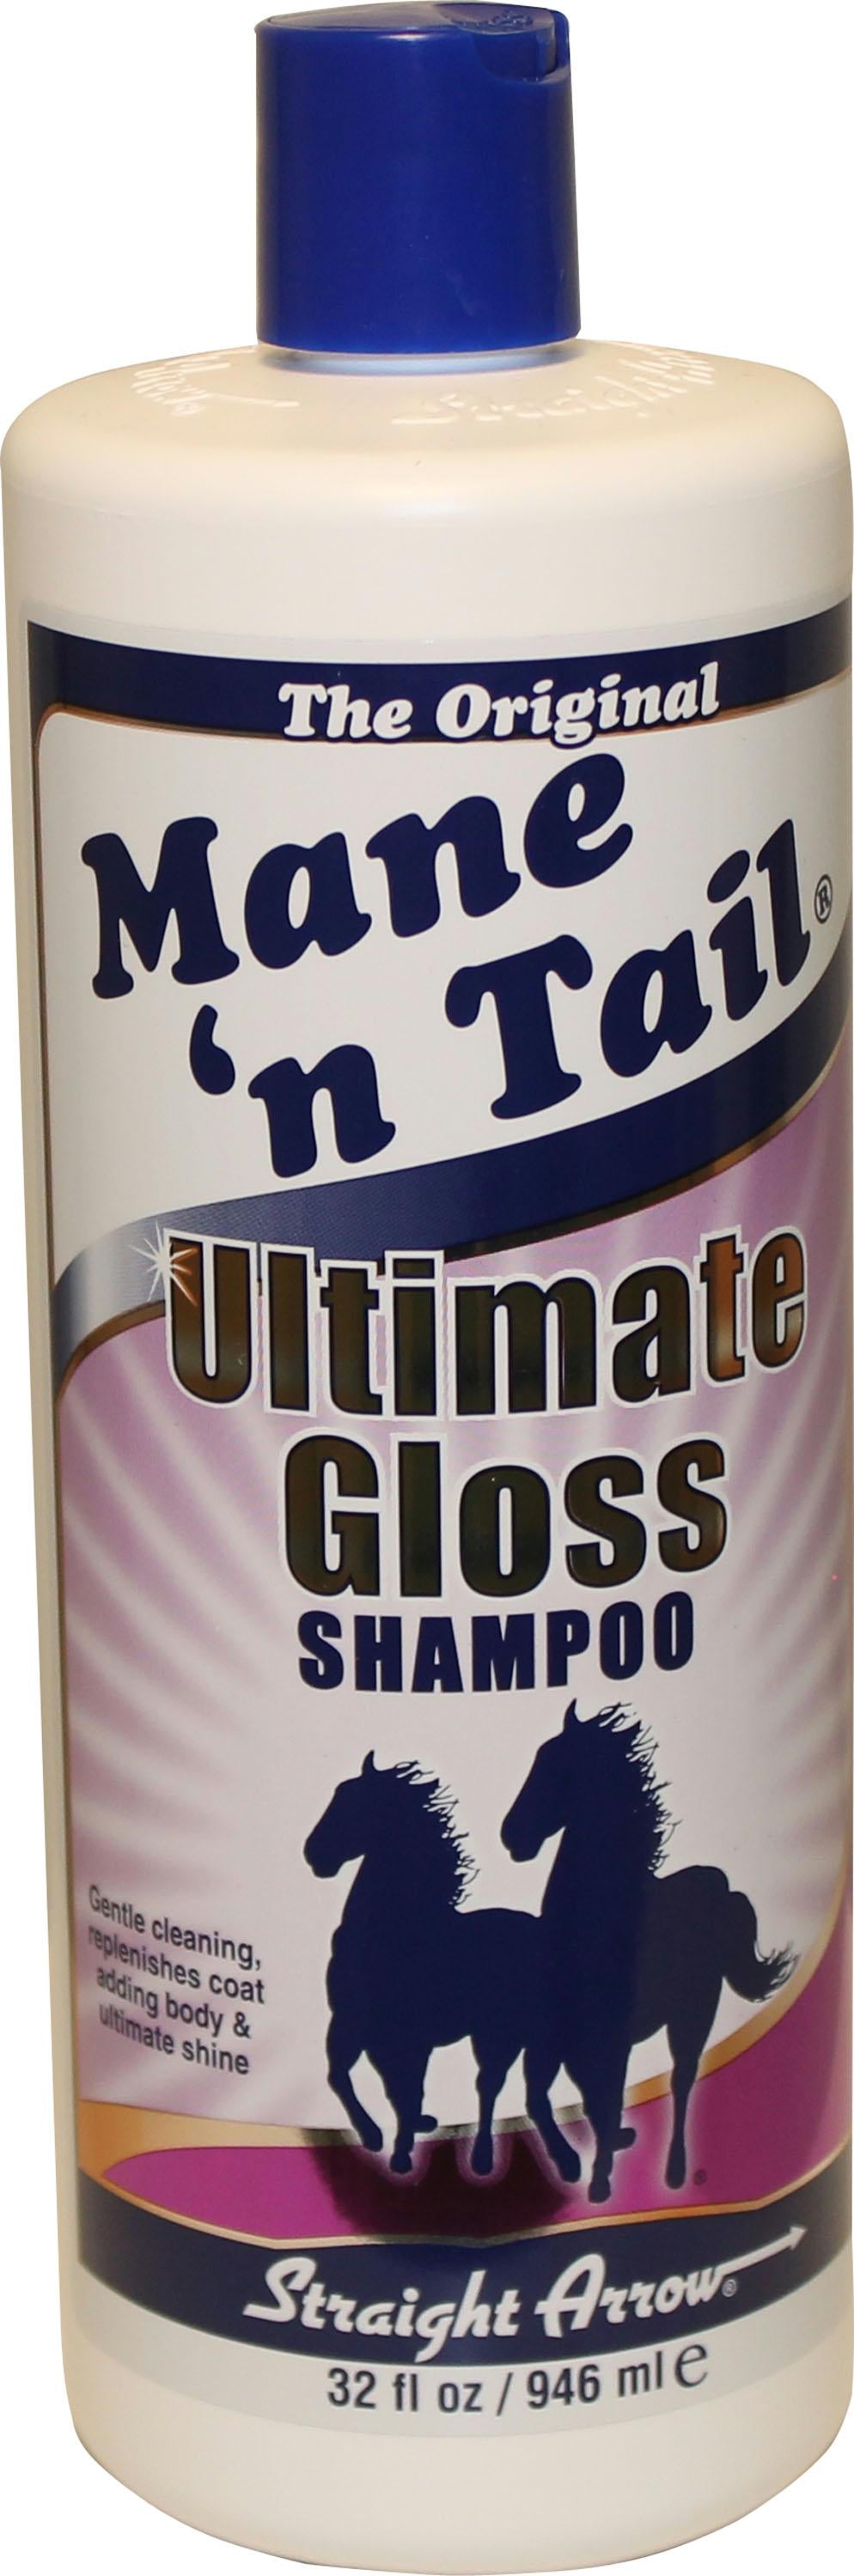 Mt Ultimate Gloss Shampoo - aomega-products